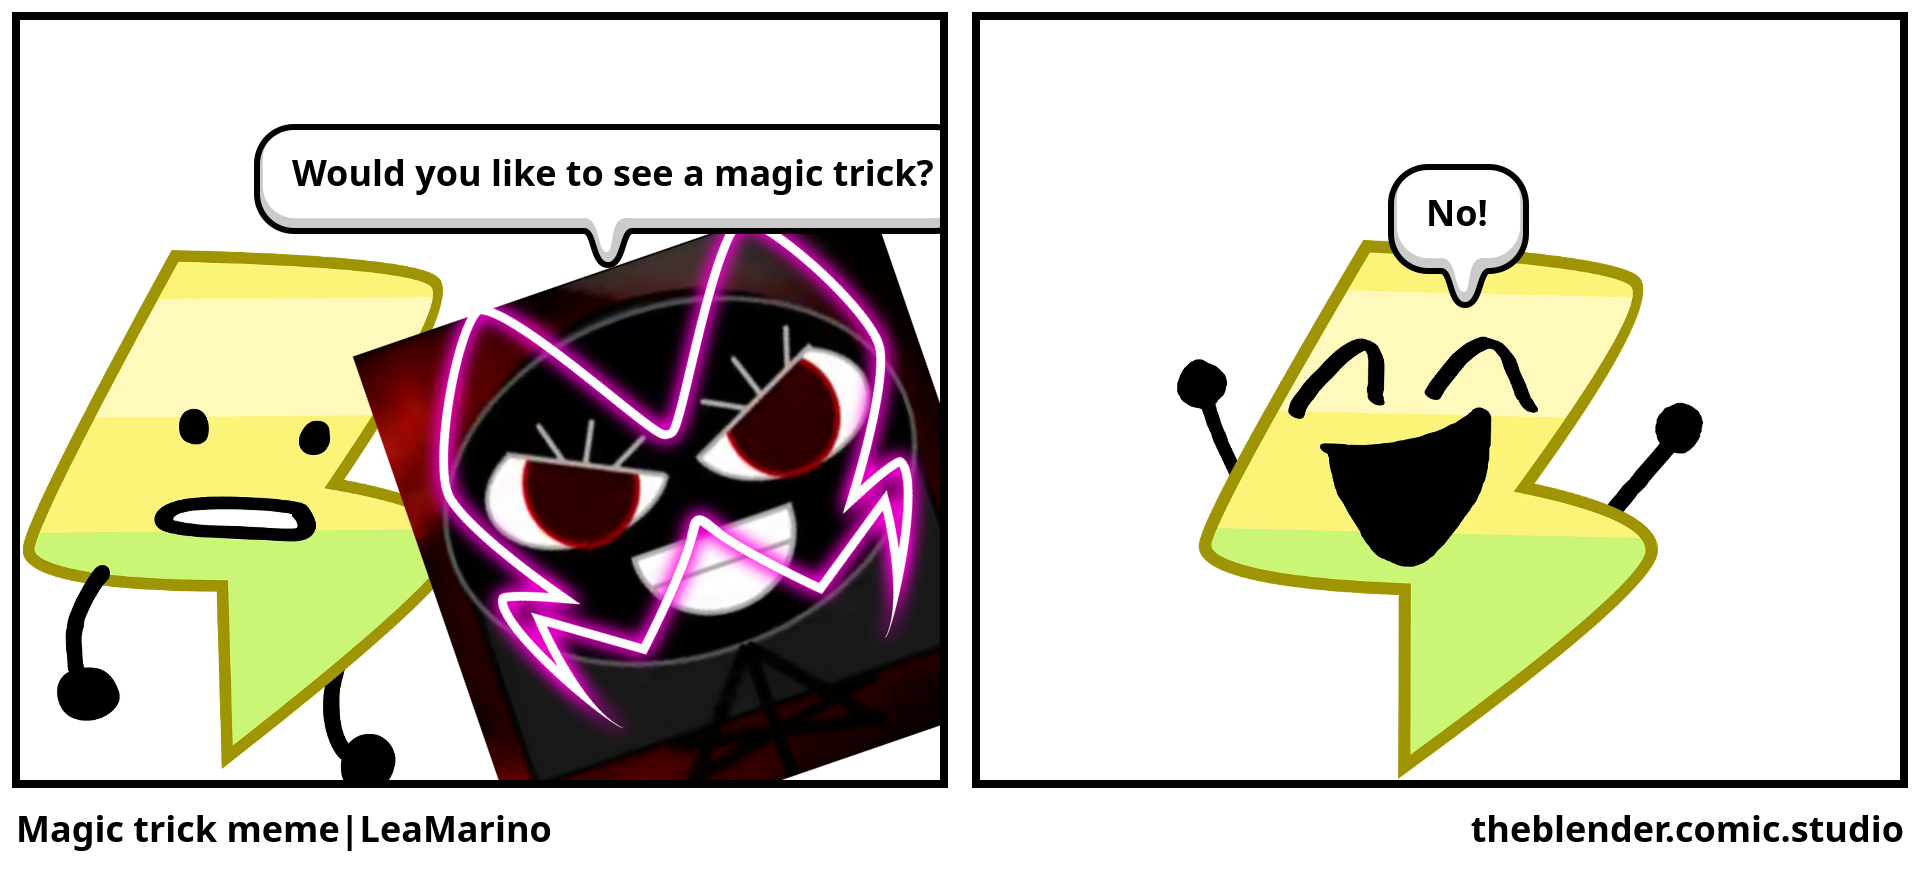 Magic trick meme|LeaMarino